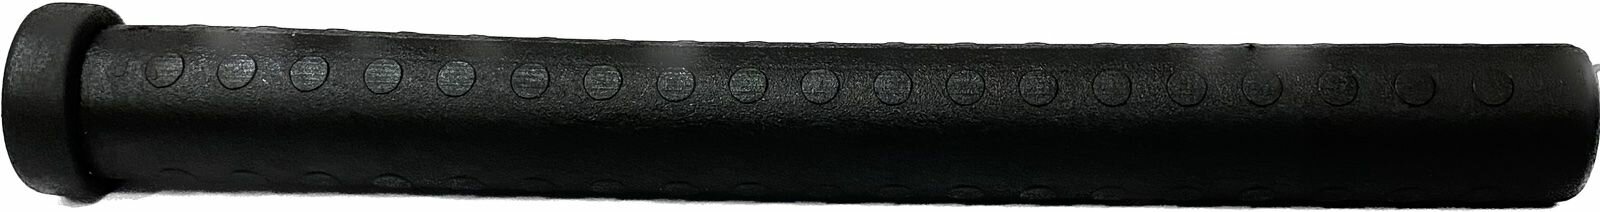 Накладка эластичная на ручку (круг 20мм) длина 27 см